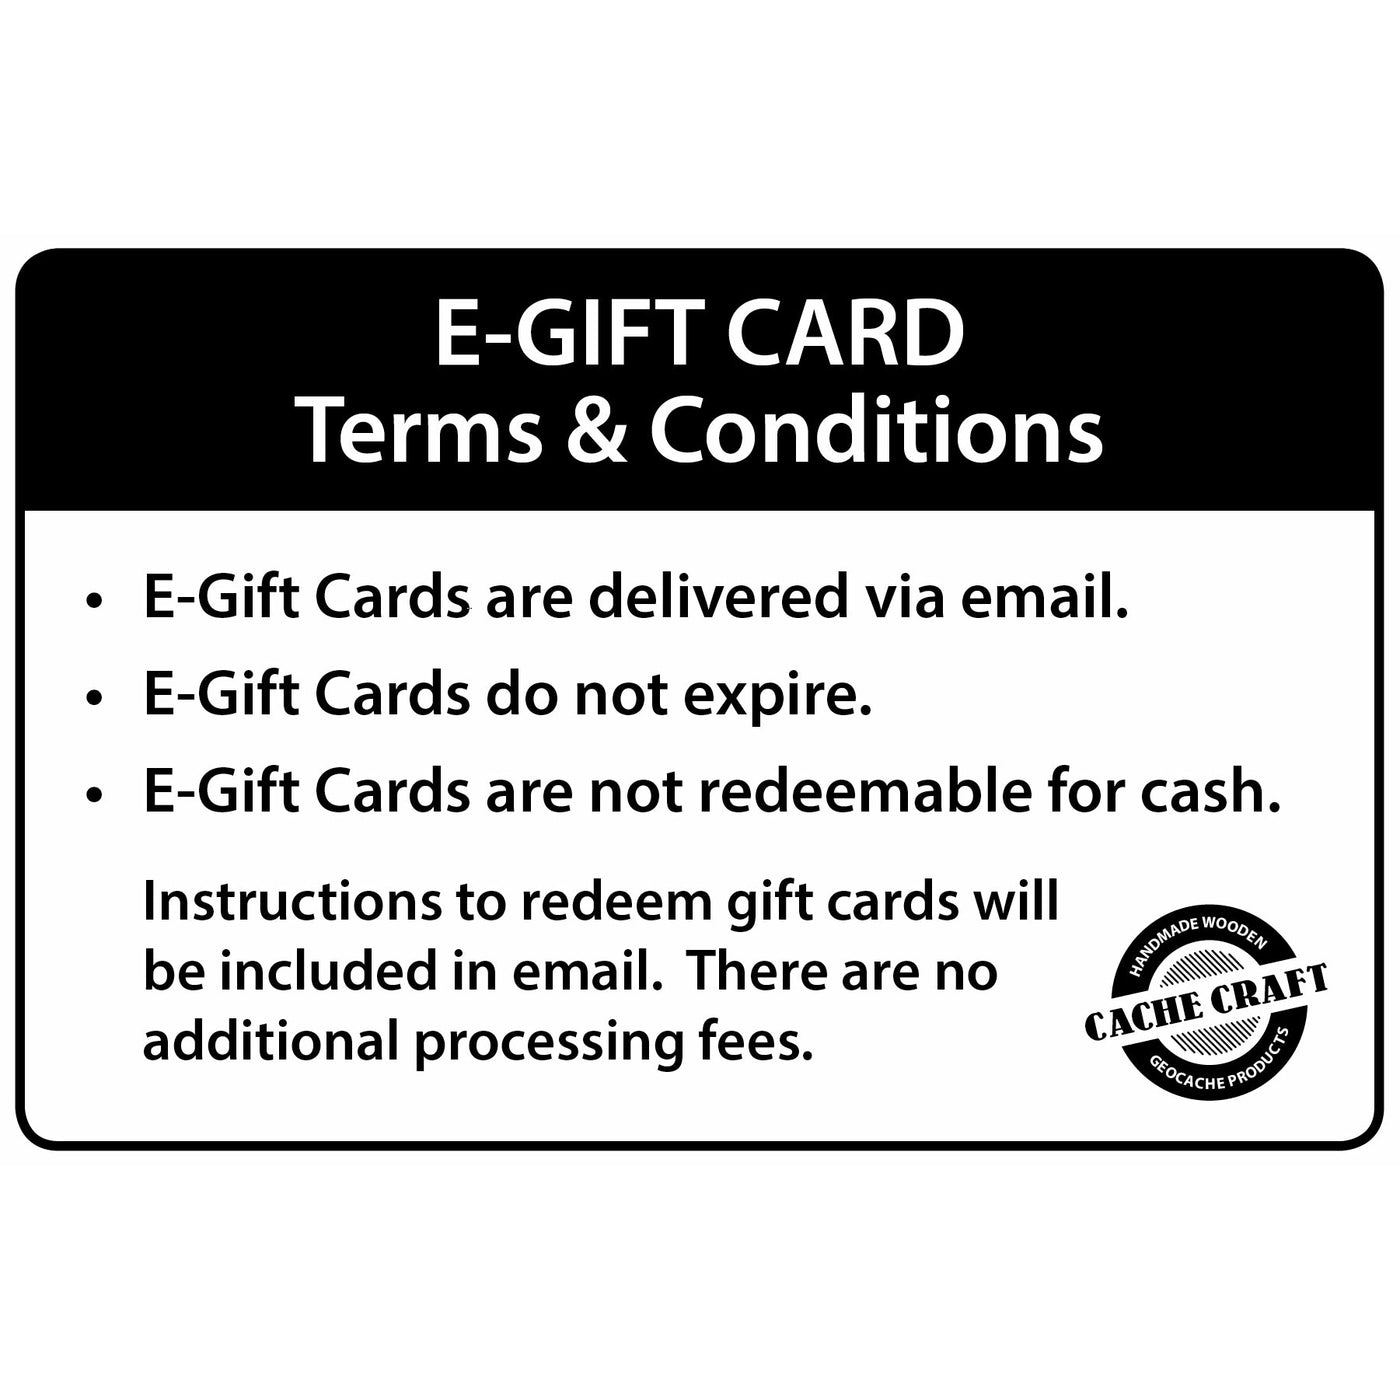 Cache Craft E-Gift Card